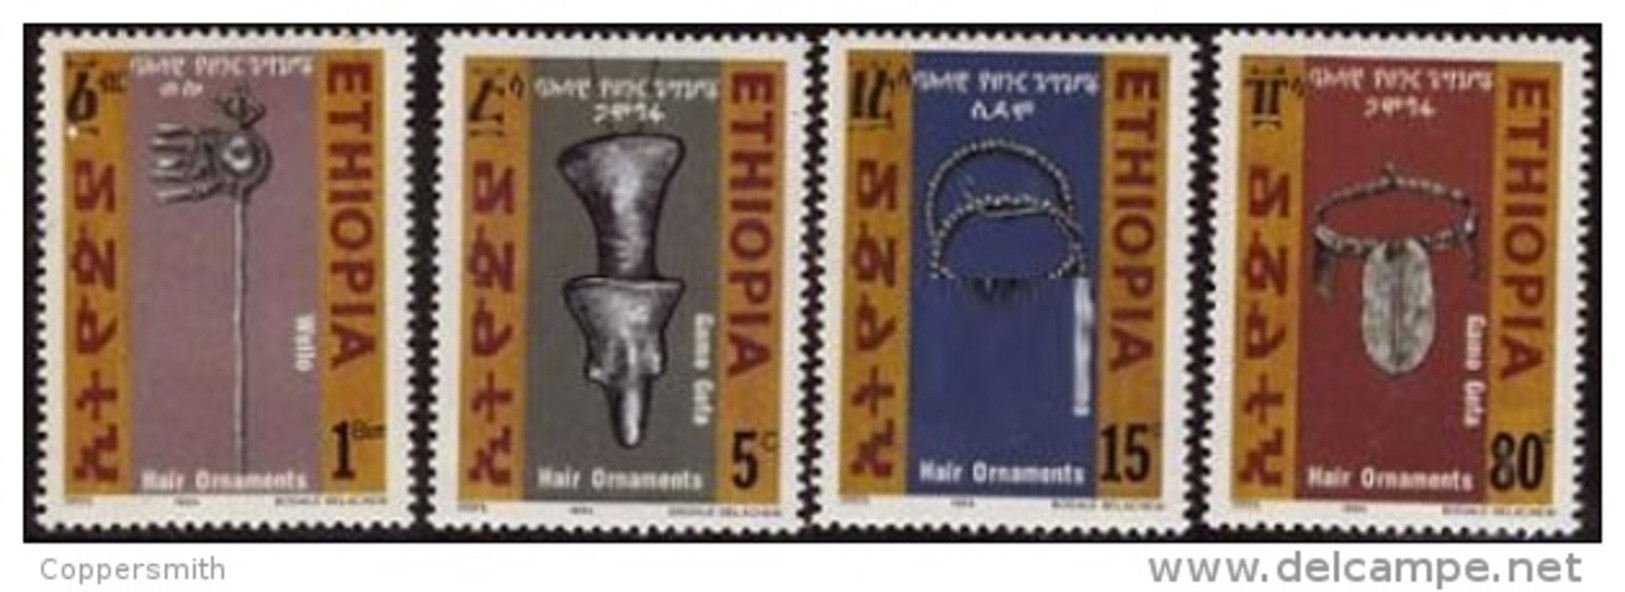 (357) Ethiopia / Ethiopie  Hair Styling / Jewellery / 1994 ** / Mnh  Michel 1482-85 - Ethiopia